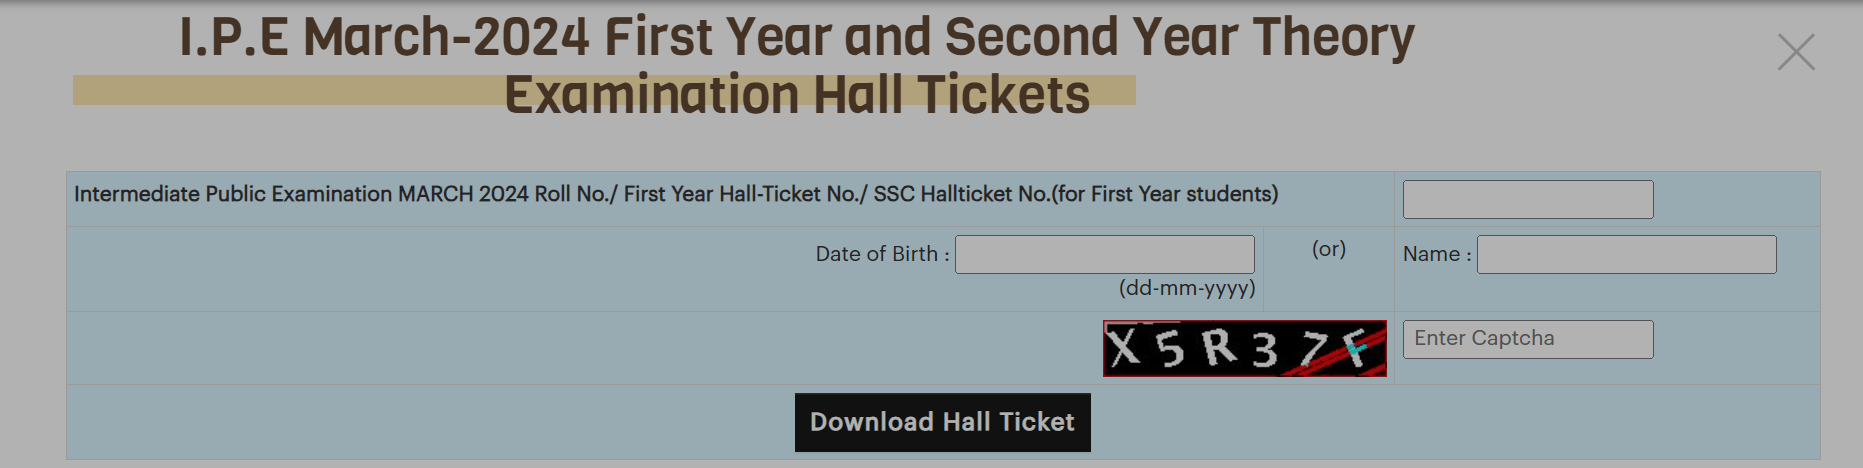 AP Inter Hall Ticket 2024